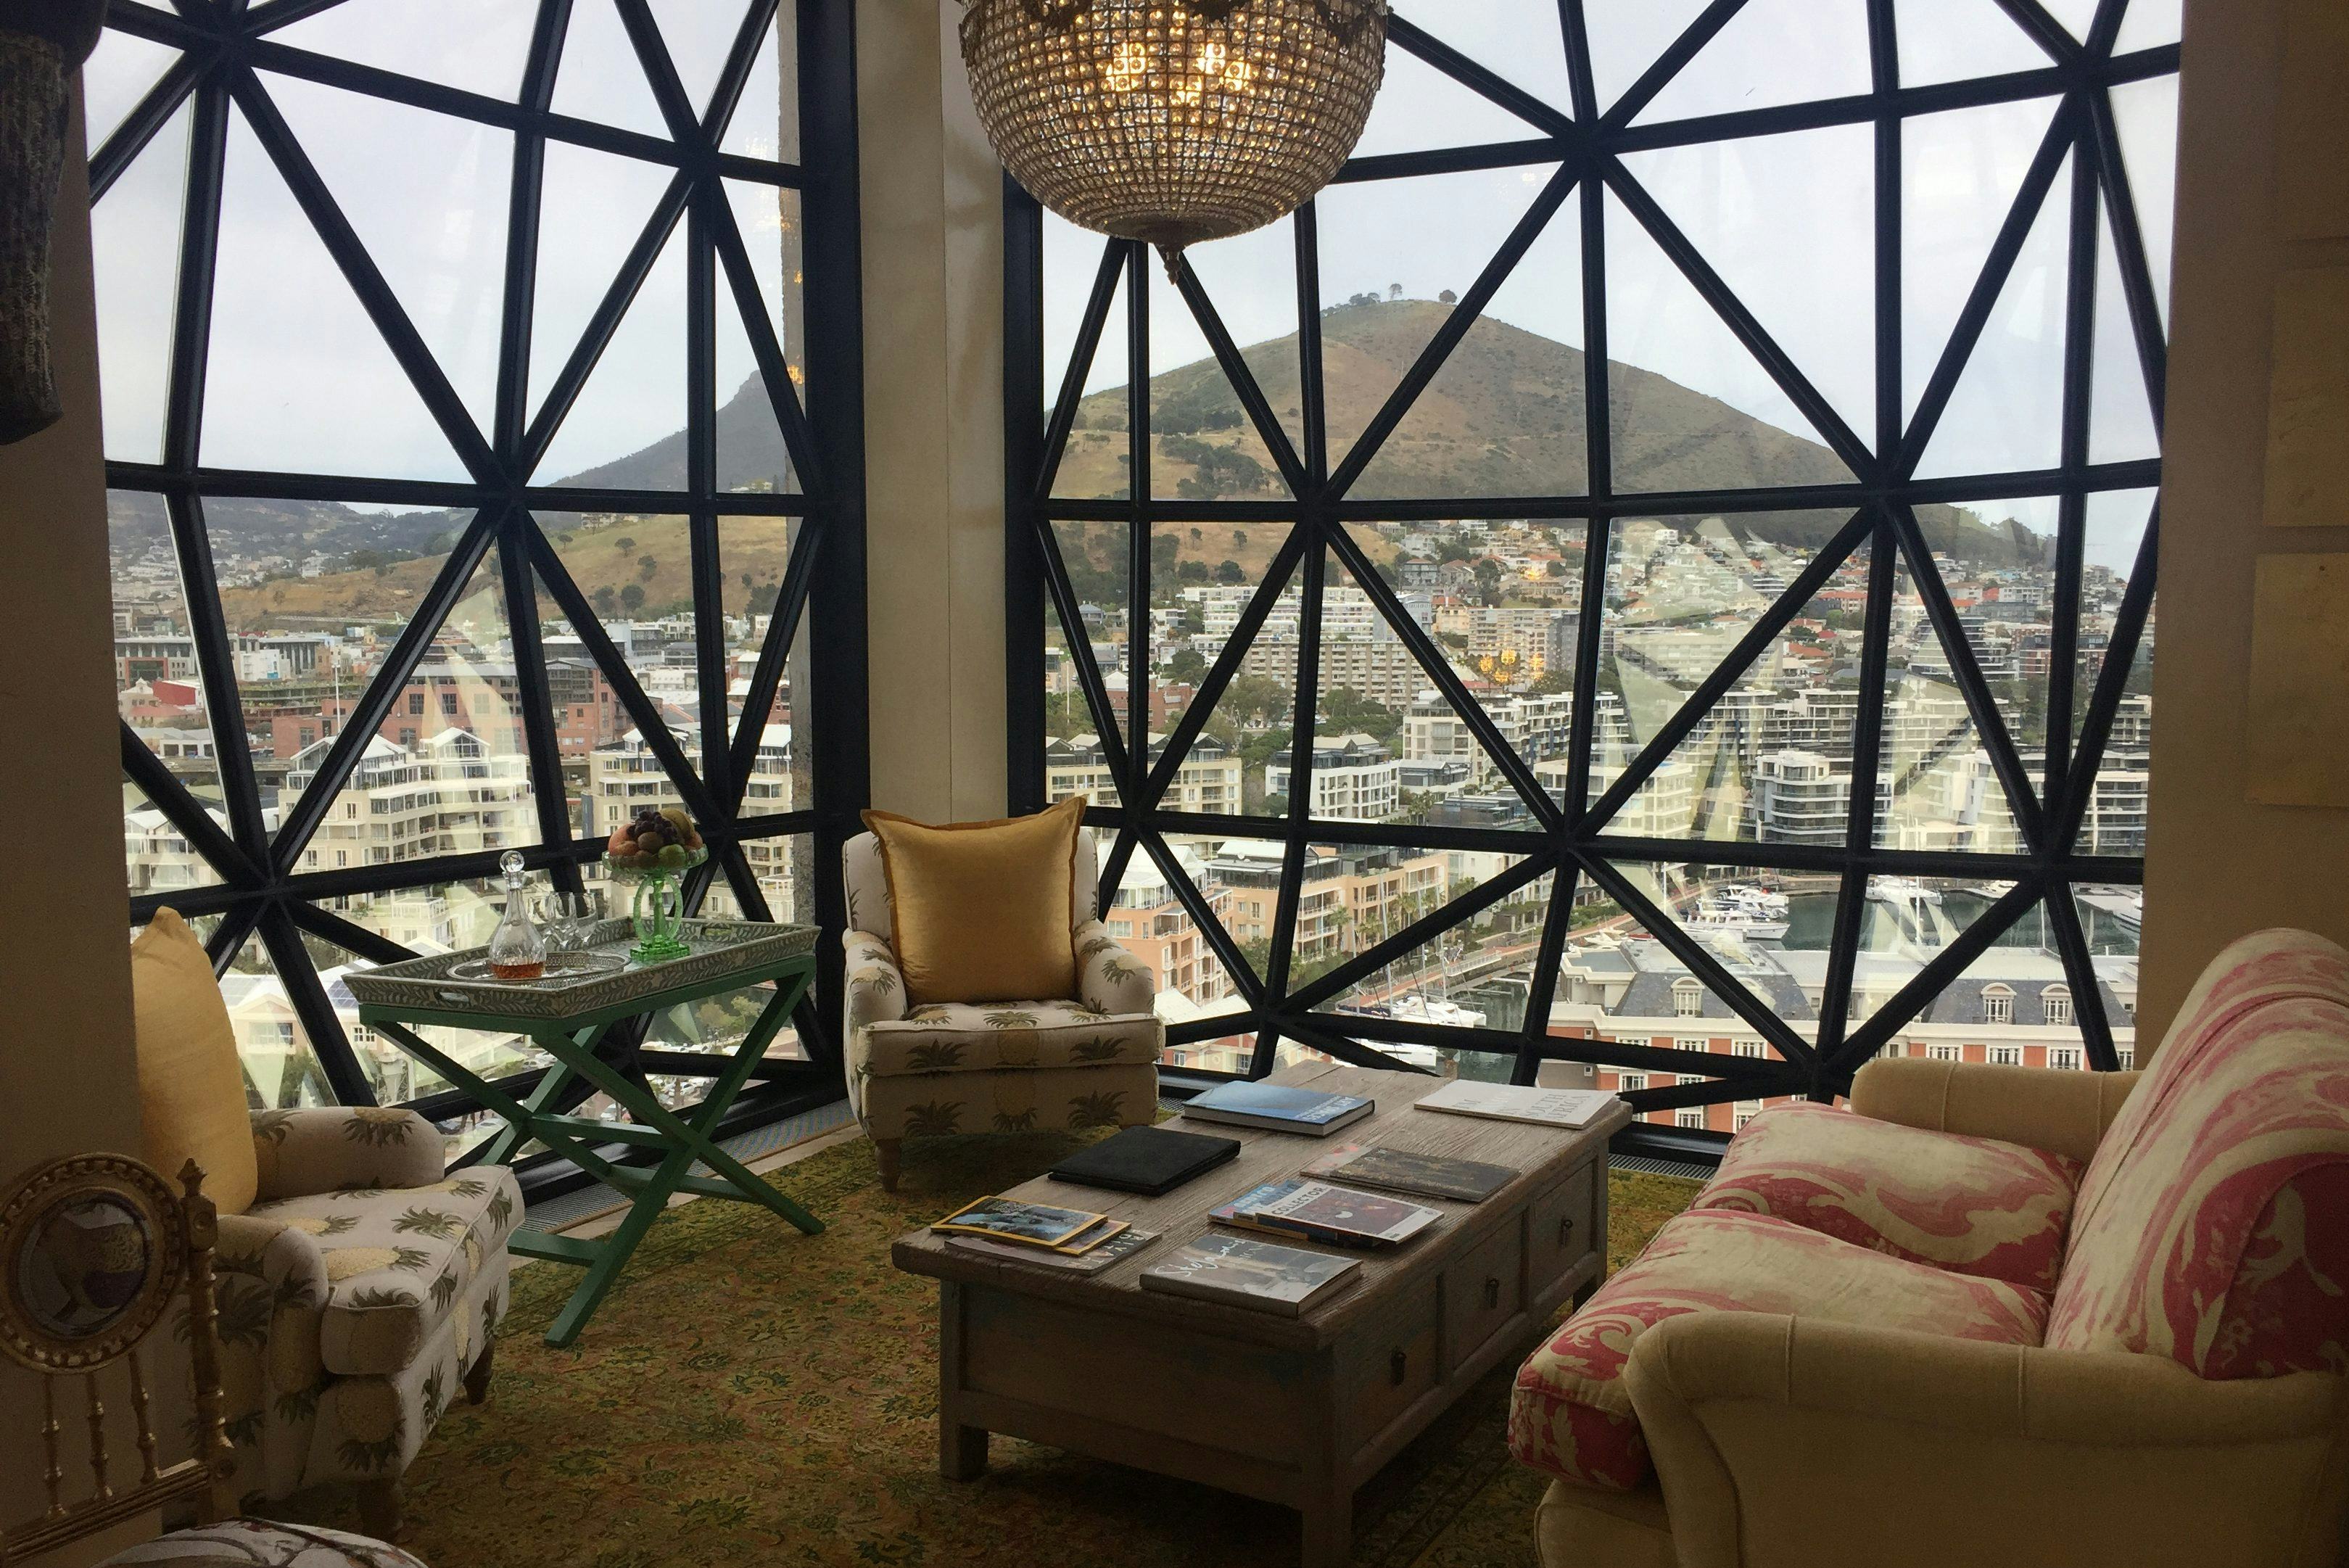 Horecainterieur The Silo Hotel in Kaapstad: Luxe in een oude graanopslag